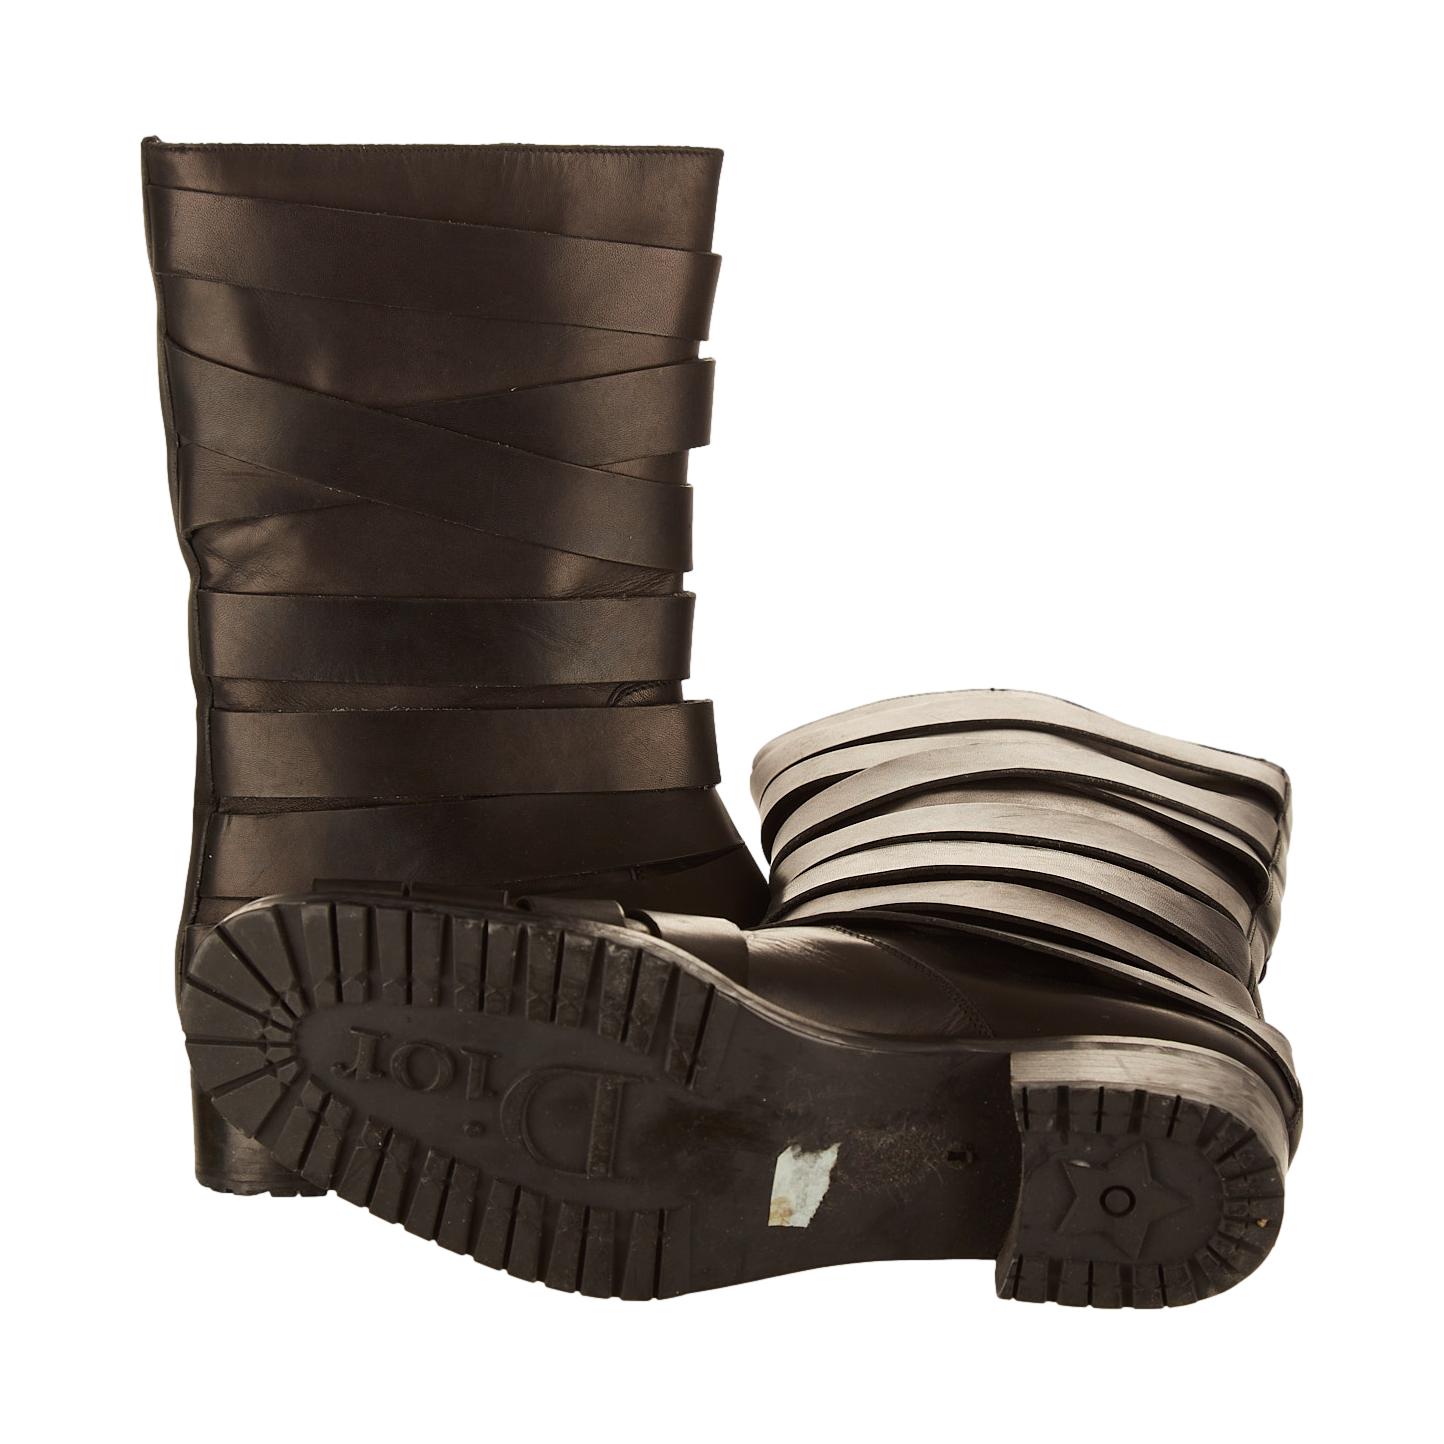 Christian Dior Empreinte Leather Moto Boots - ShopStyle